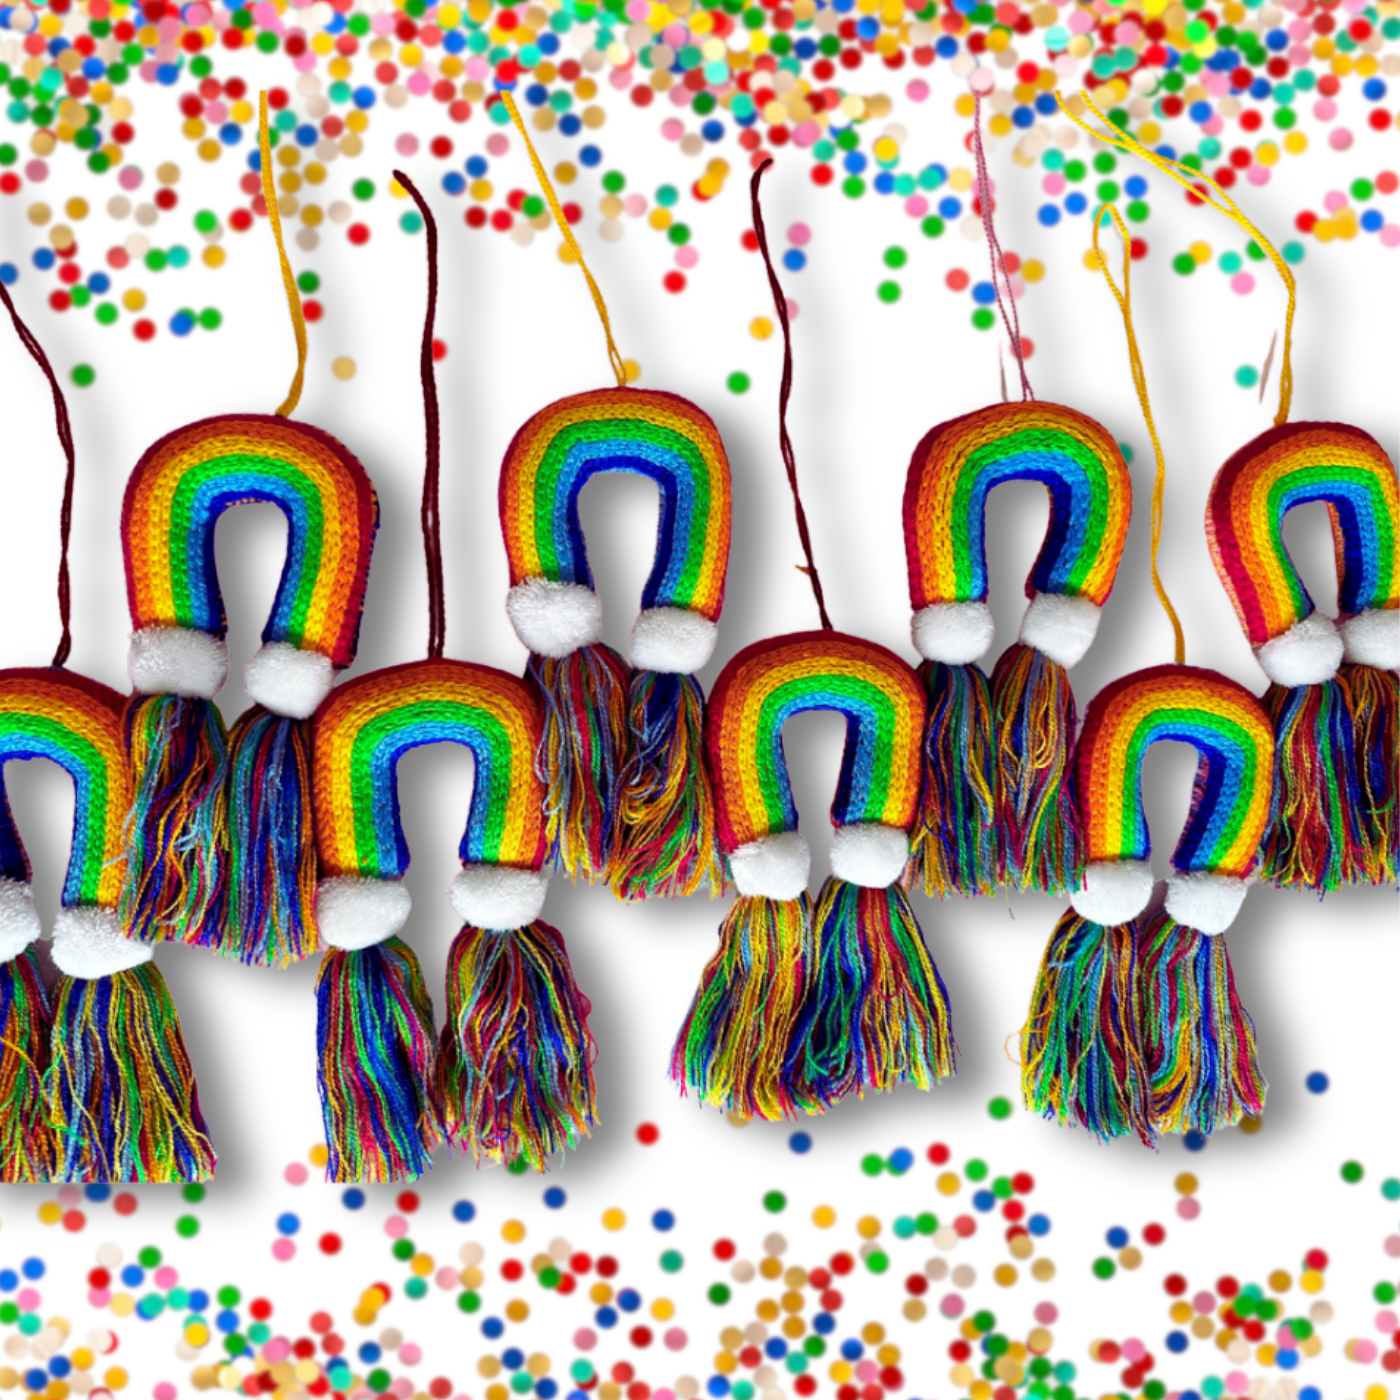 Rainbow Arch Pom Pom Ornaments with tassels